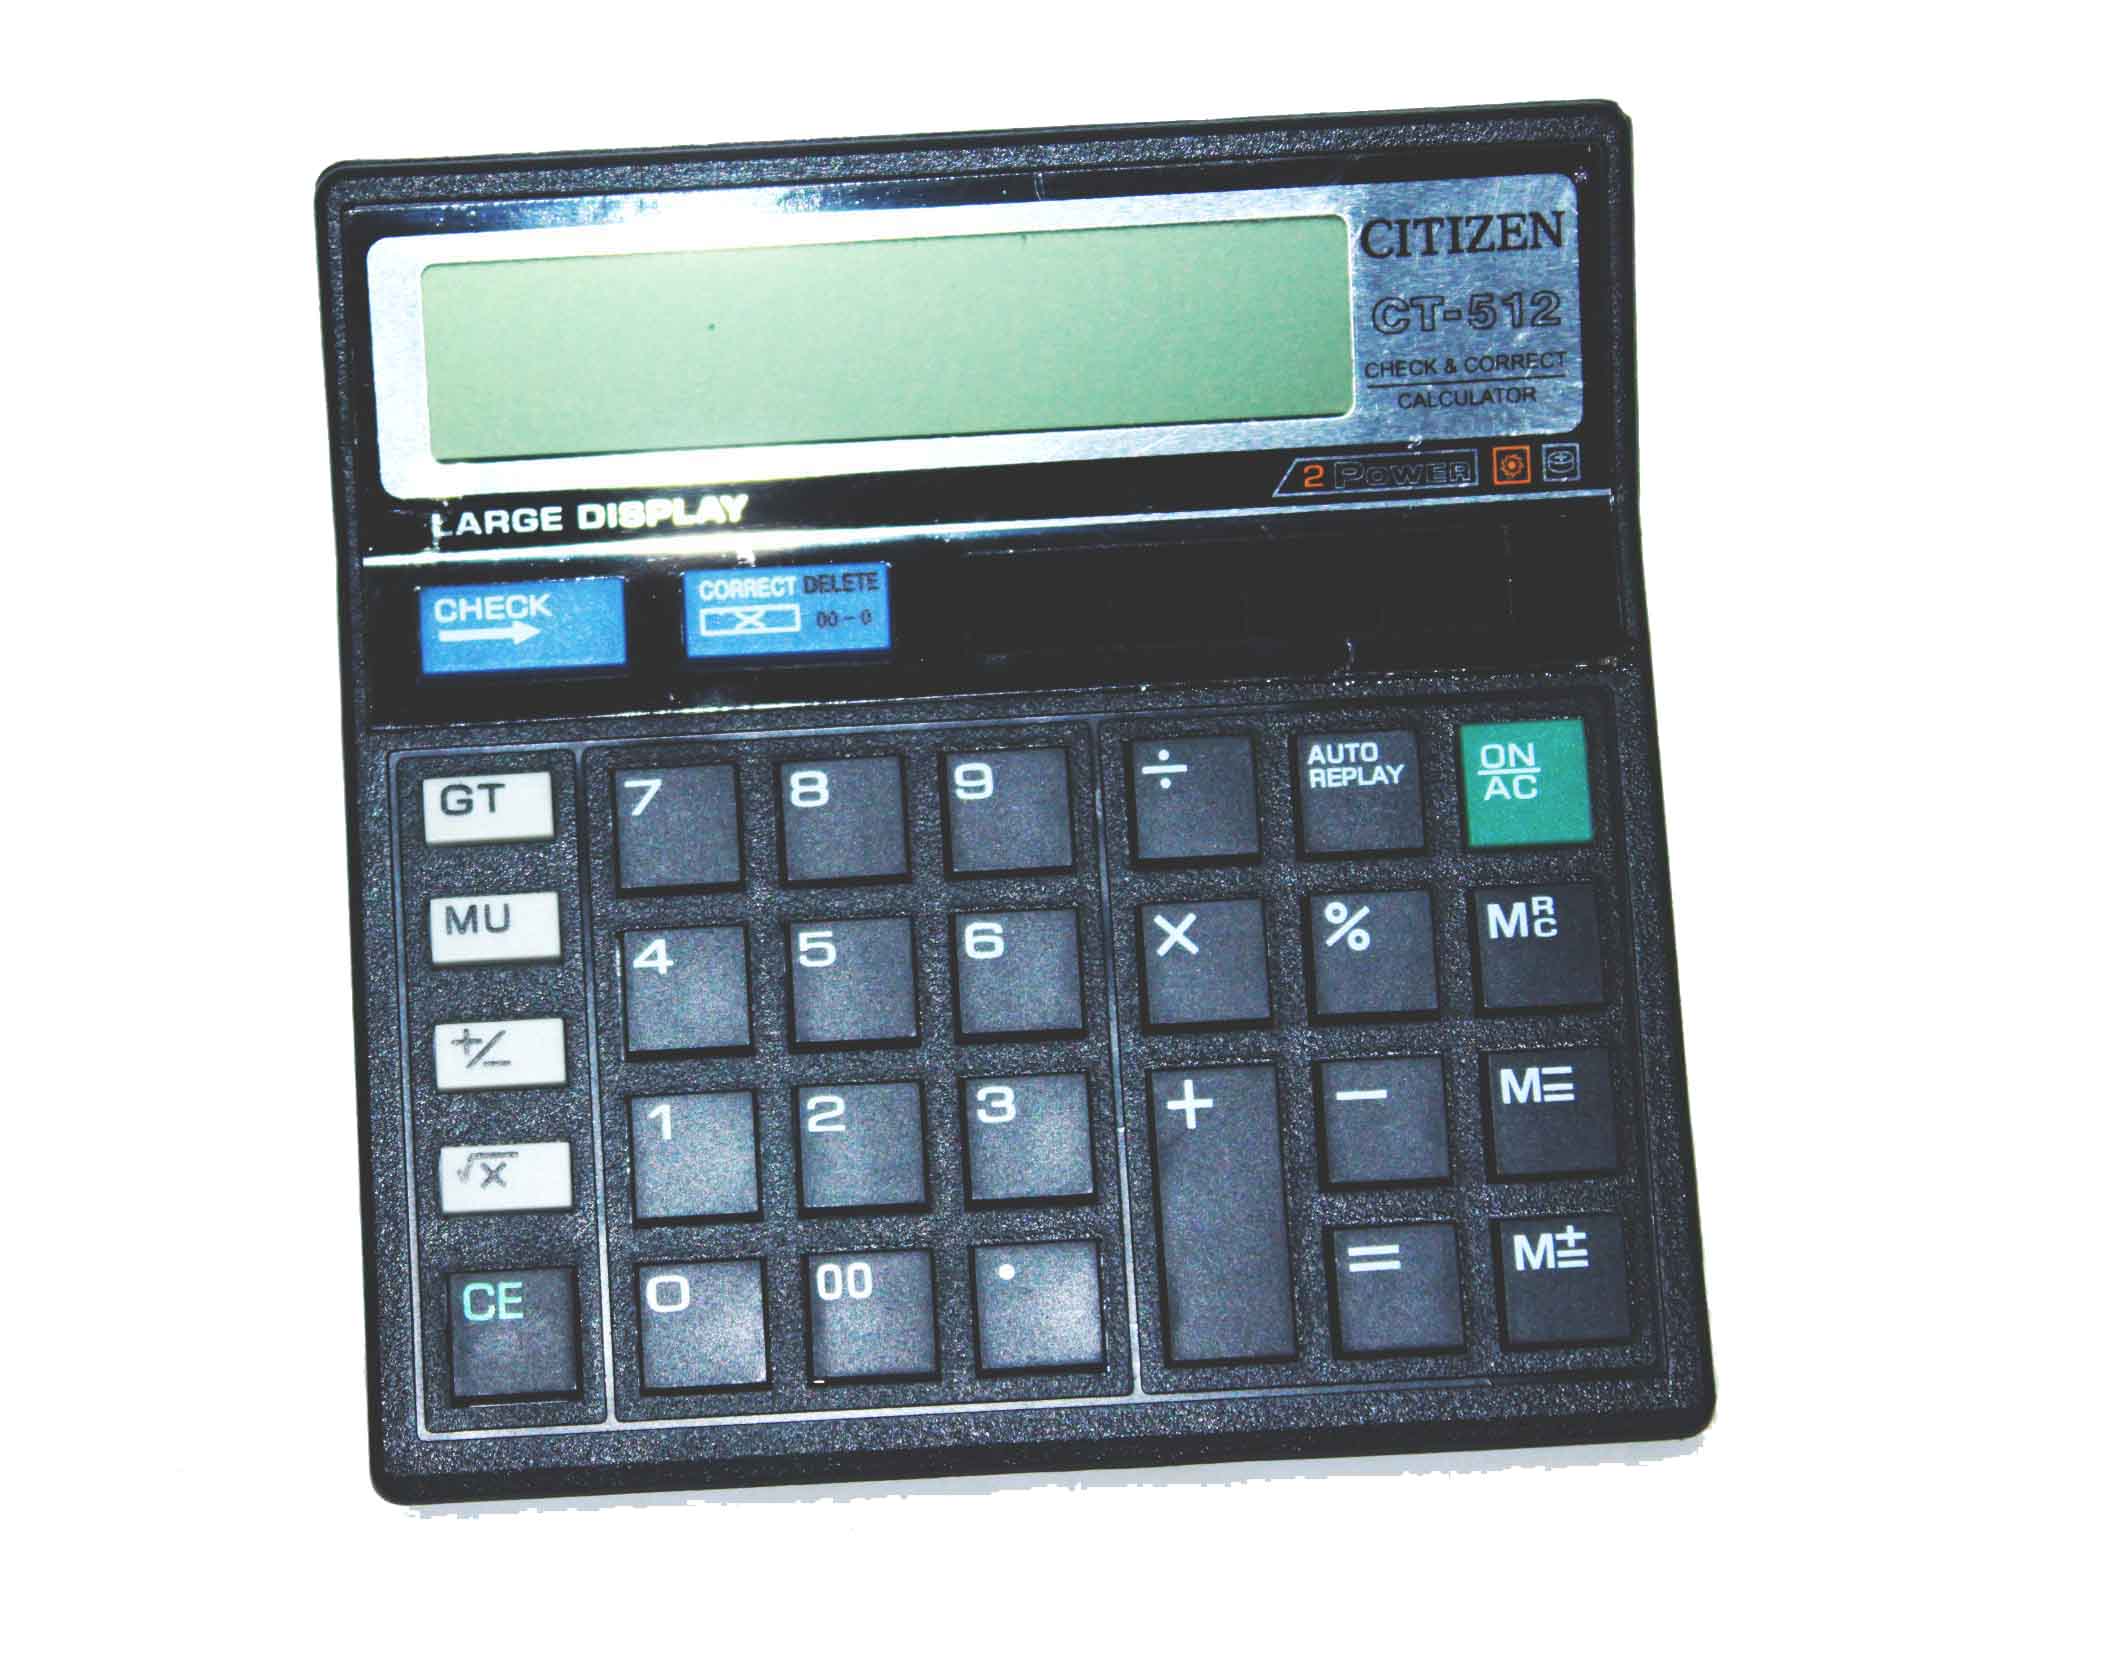 Citizen Calculator Ct-512